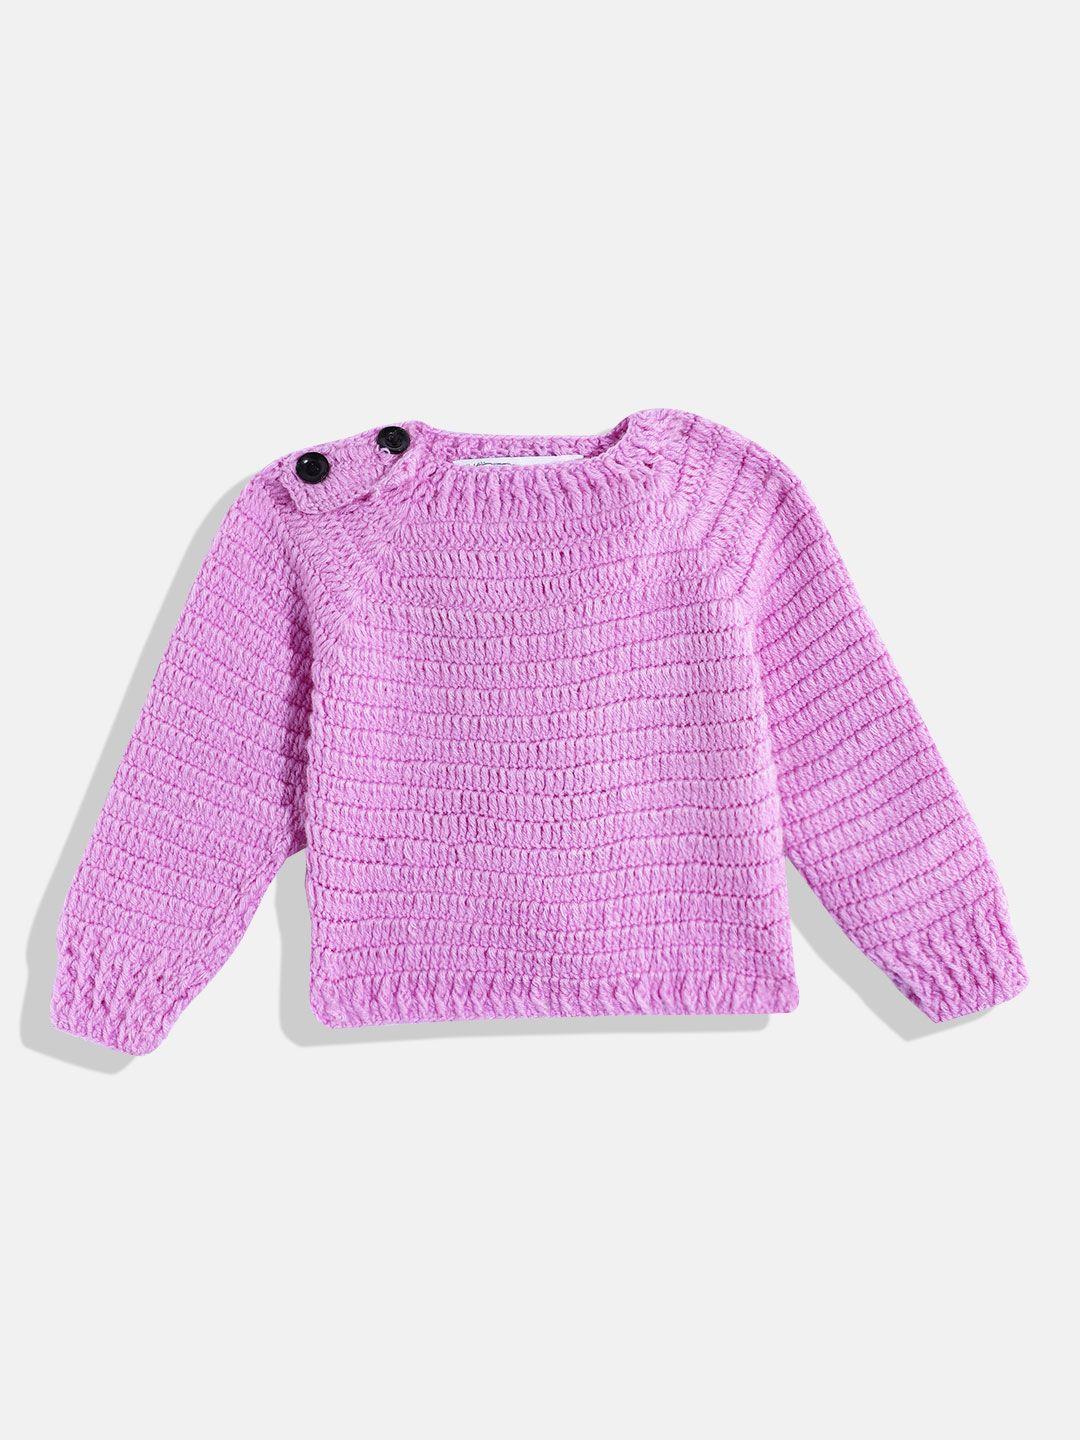 chutput-kids-woollen-sweater-vest